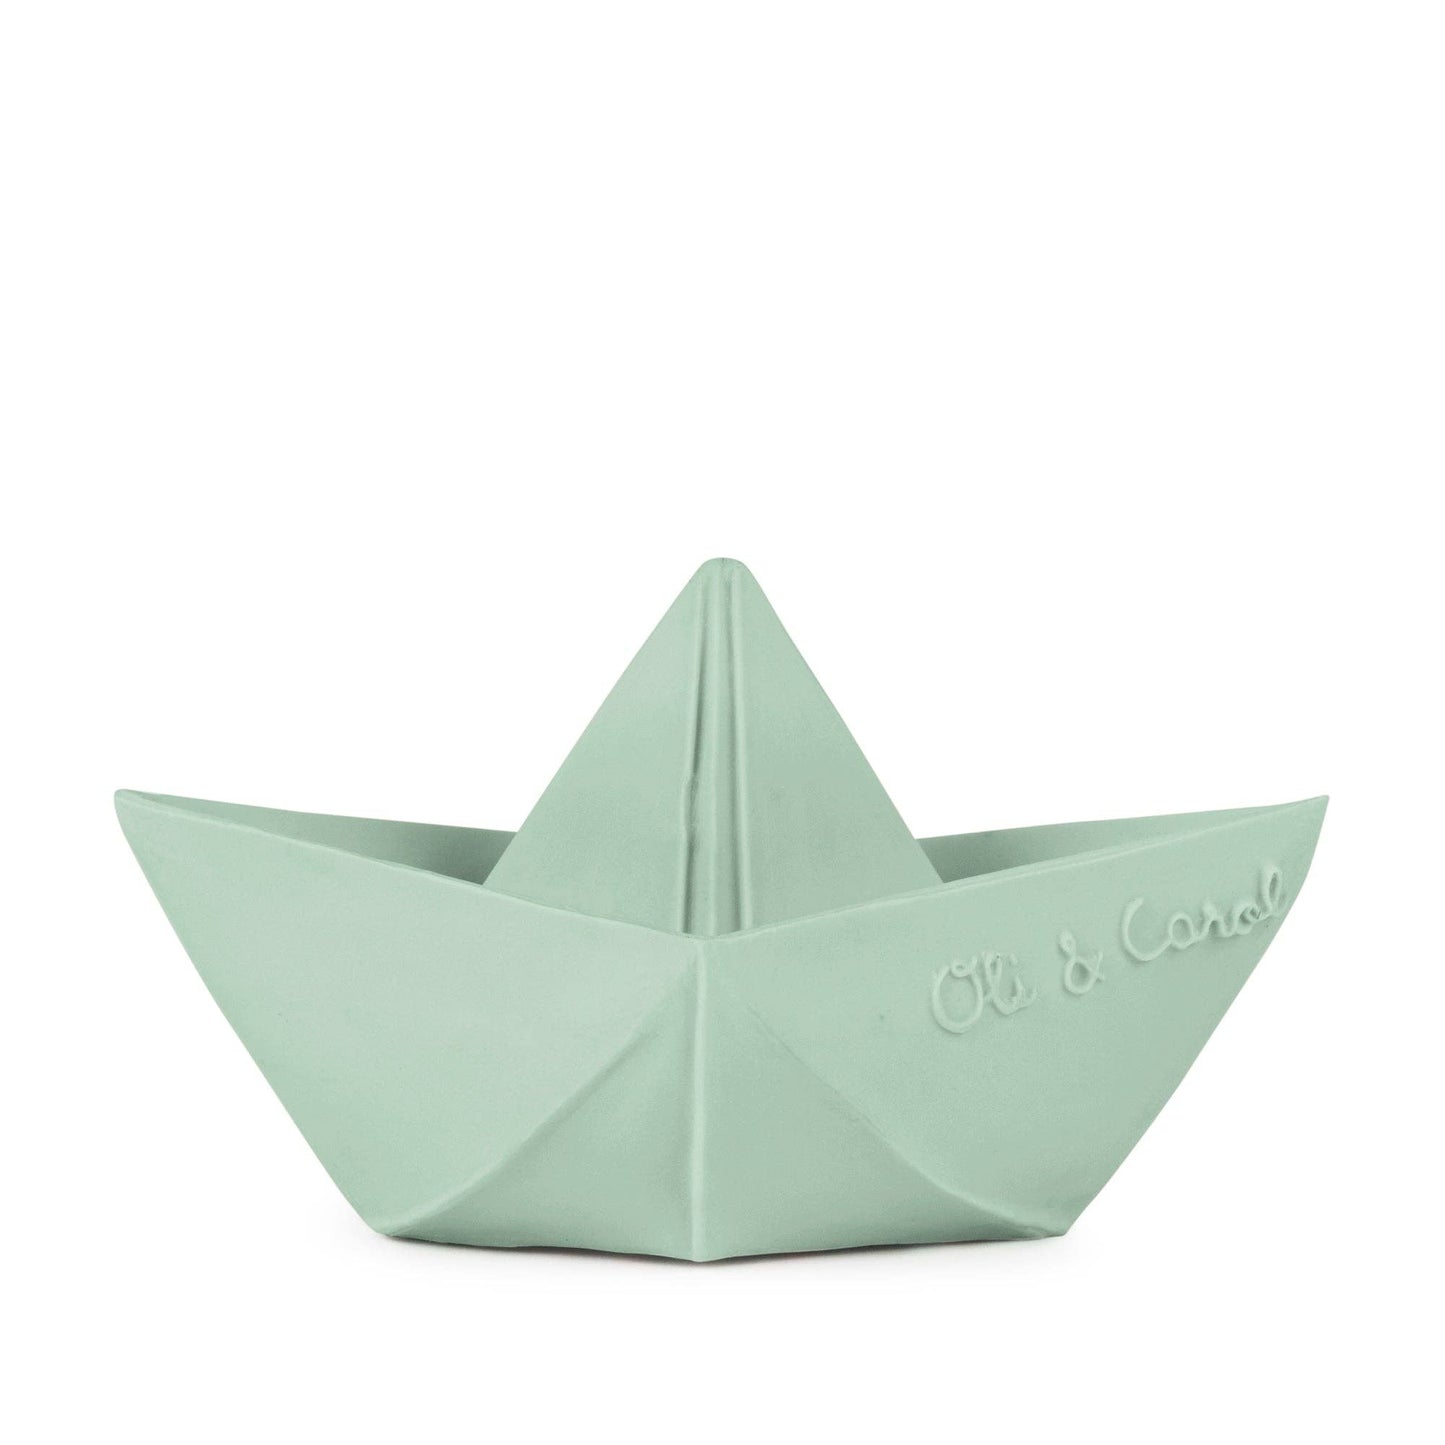 Oli & Carol US - Origami Boat